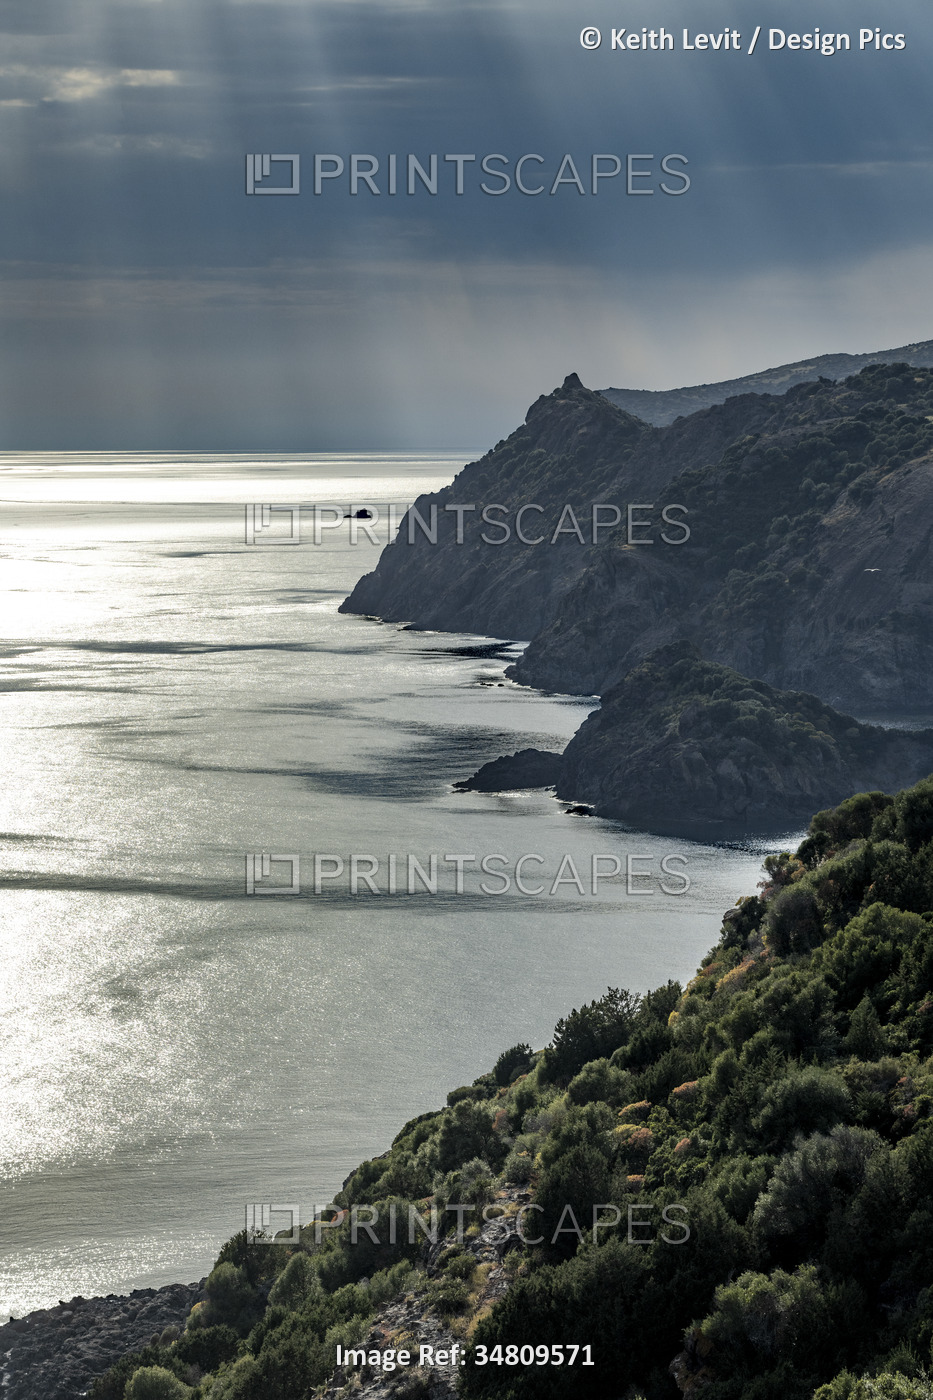 Stunning coastal view of the Sardinian cliffs overlooking the Mediterranean Sea ...